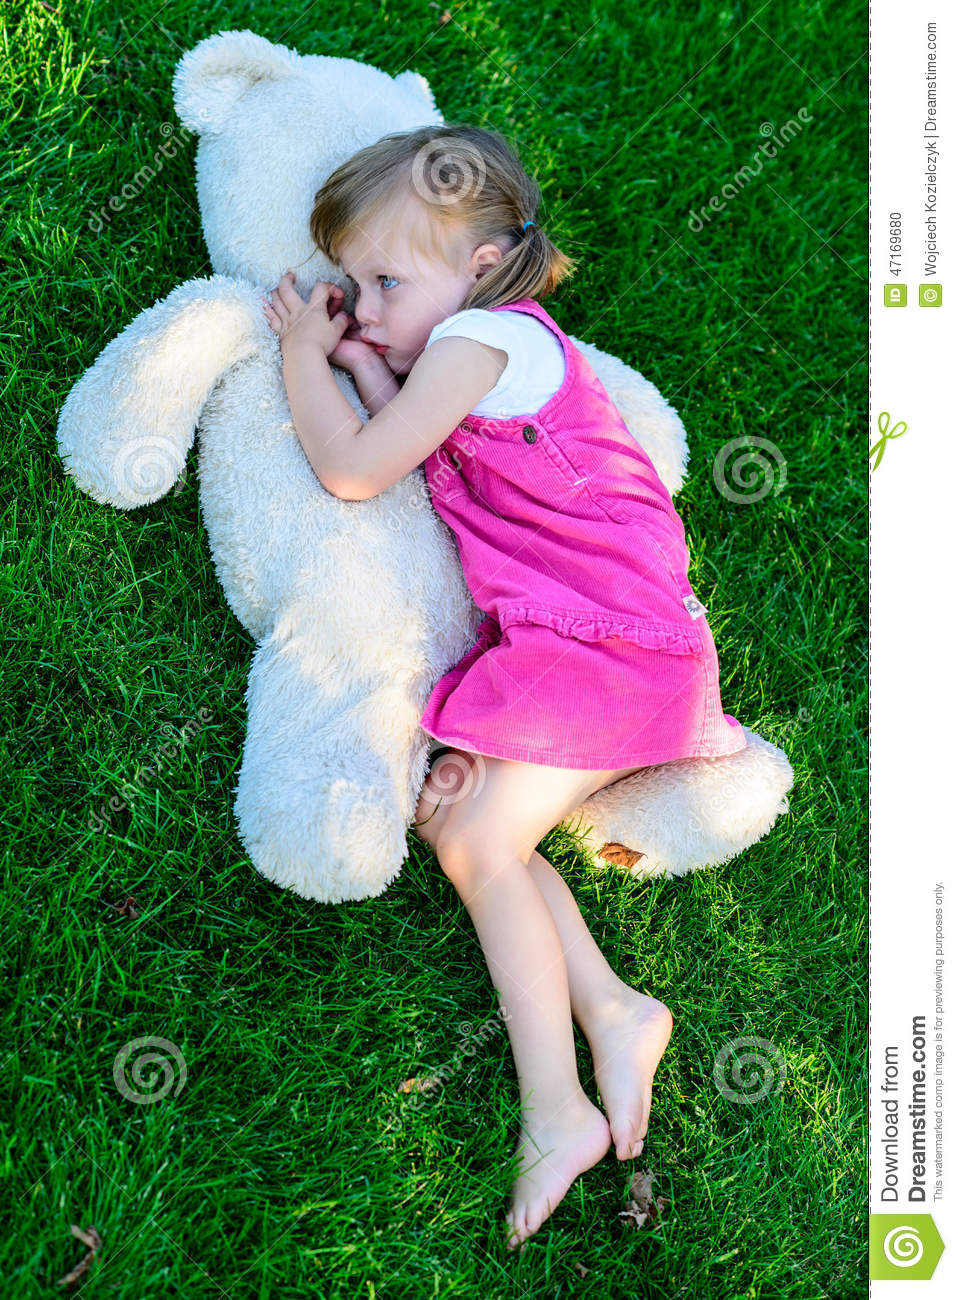 Sad Little Girl Lying On Grass With Large Teddy Bear  Upset Child